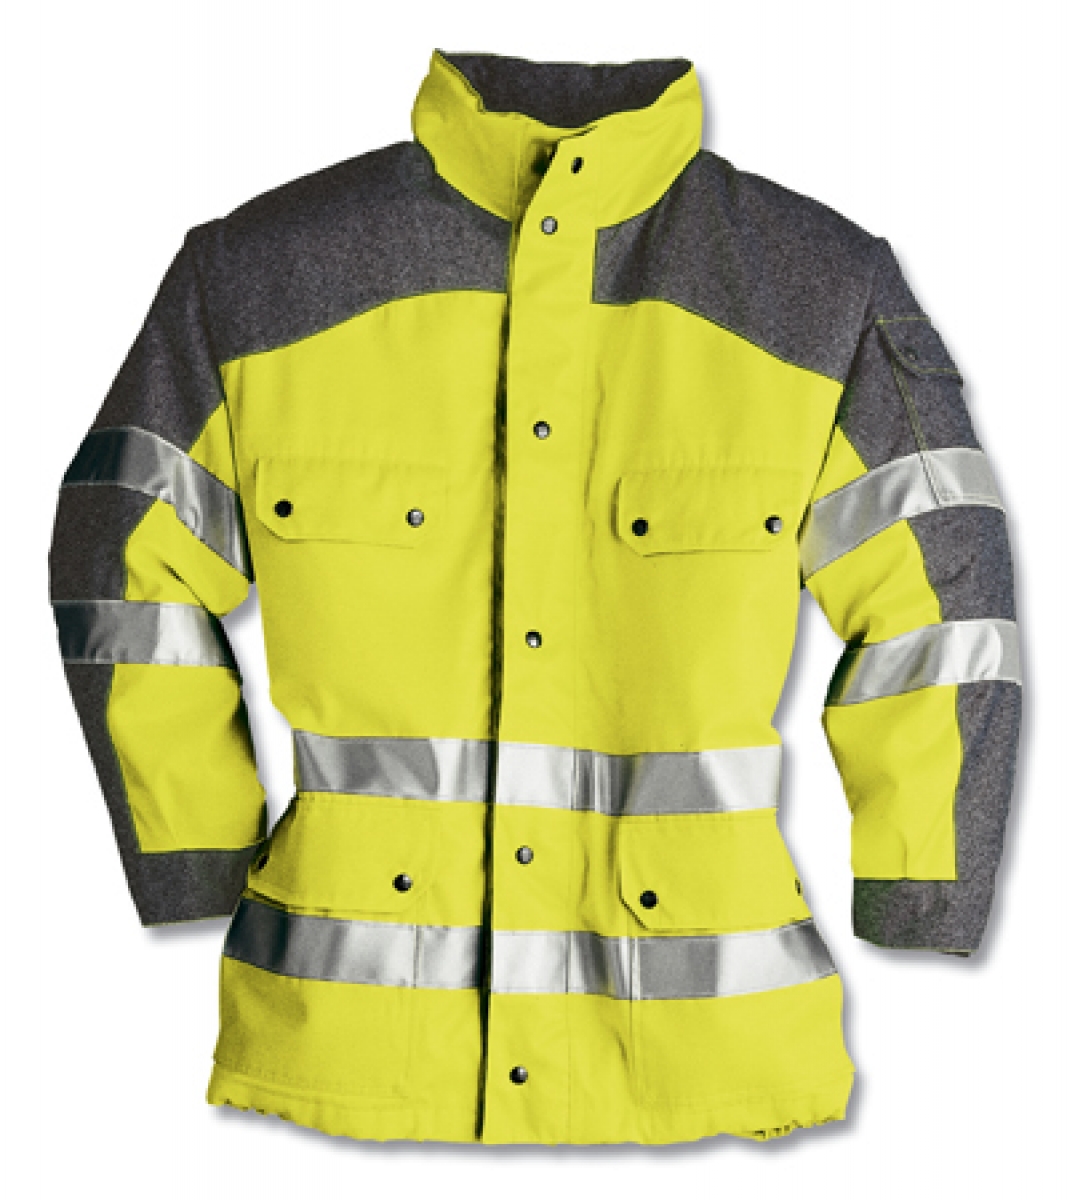 KEMPEL Warnschutzjacke Arbeitsjacke Warnkleidung Warnschutz Warnjacke warngelb anthrazit